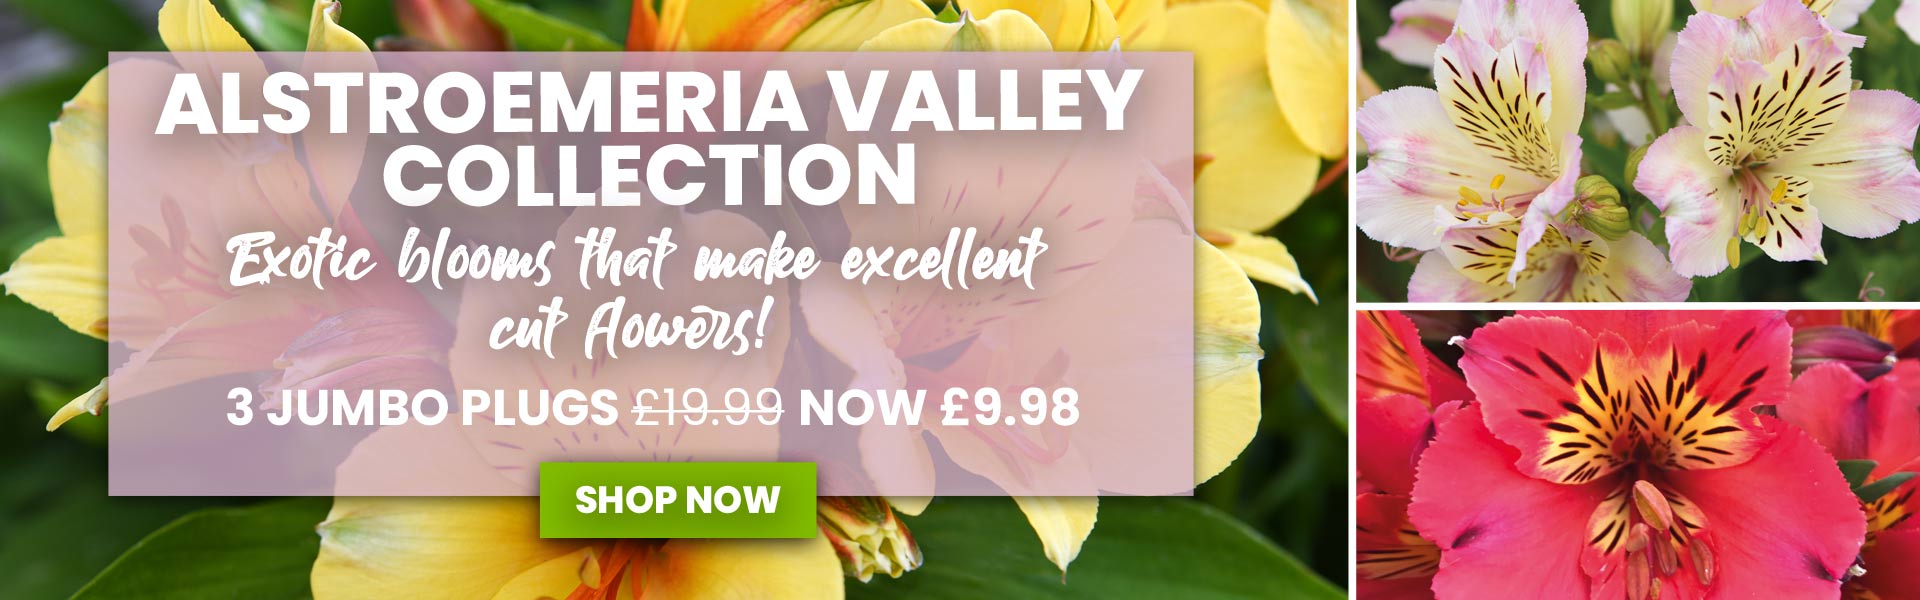 Alstroemeria Valley Collection